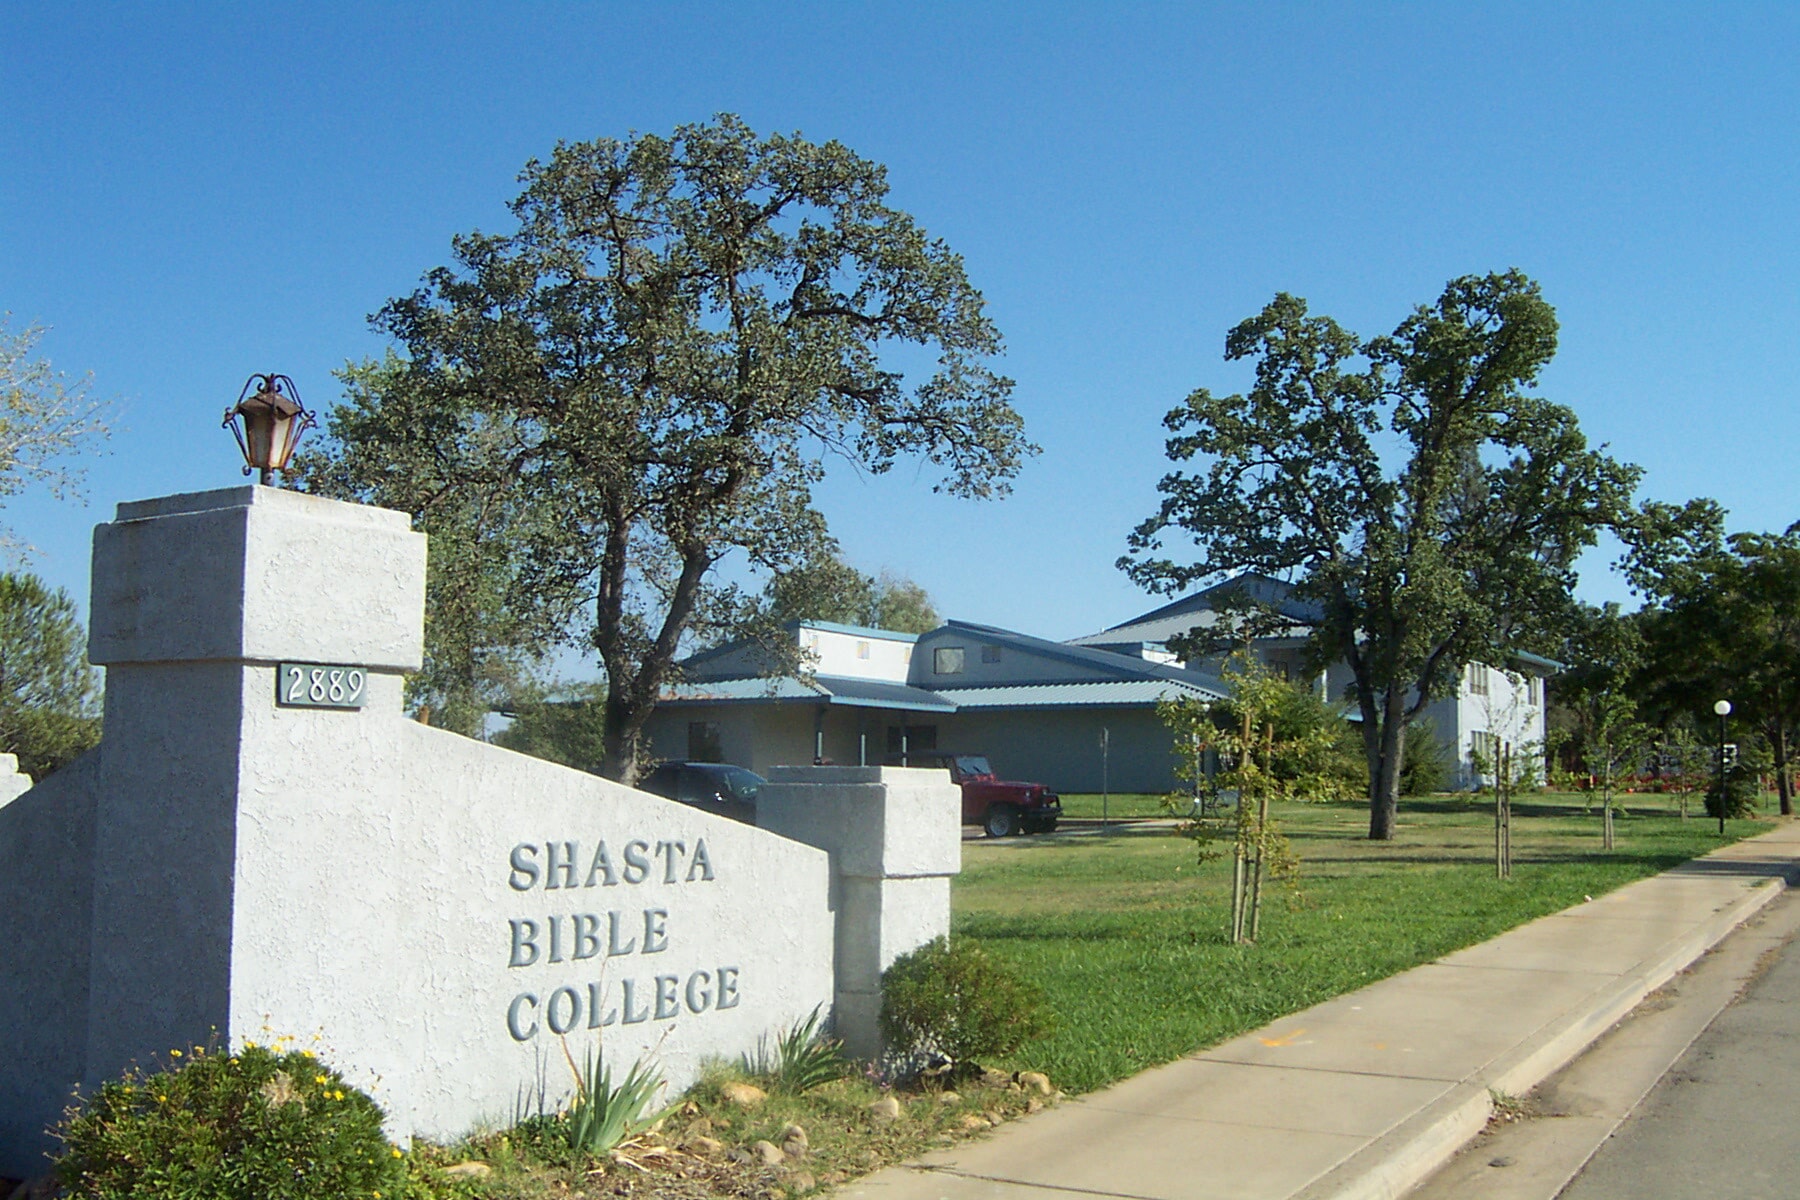 Shasta Bible College and Graduate School